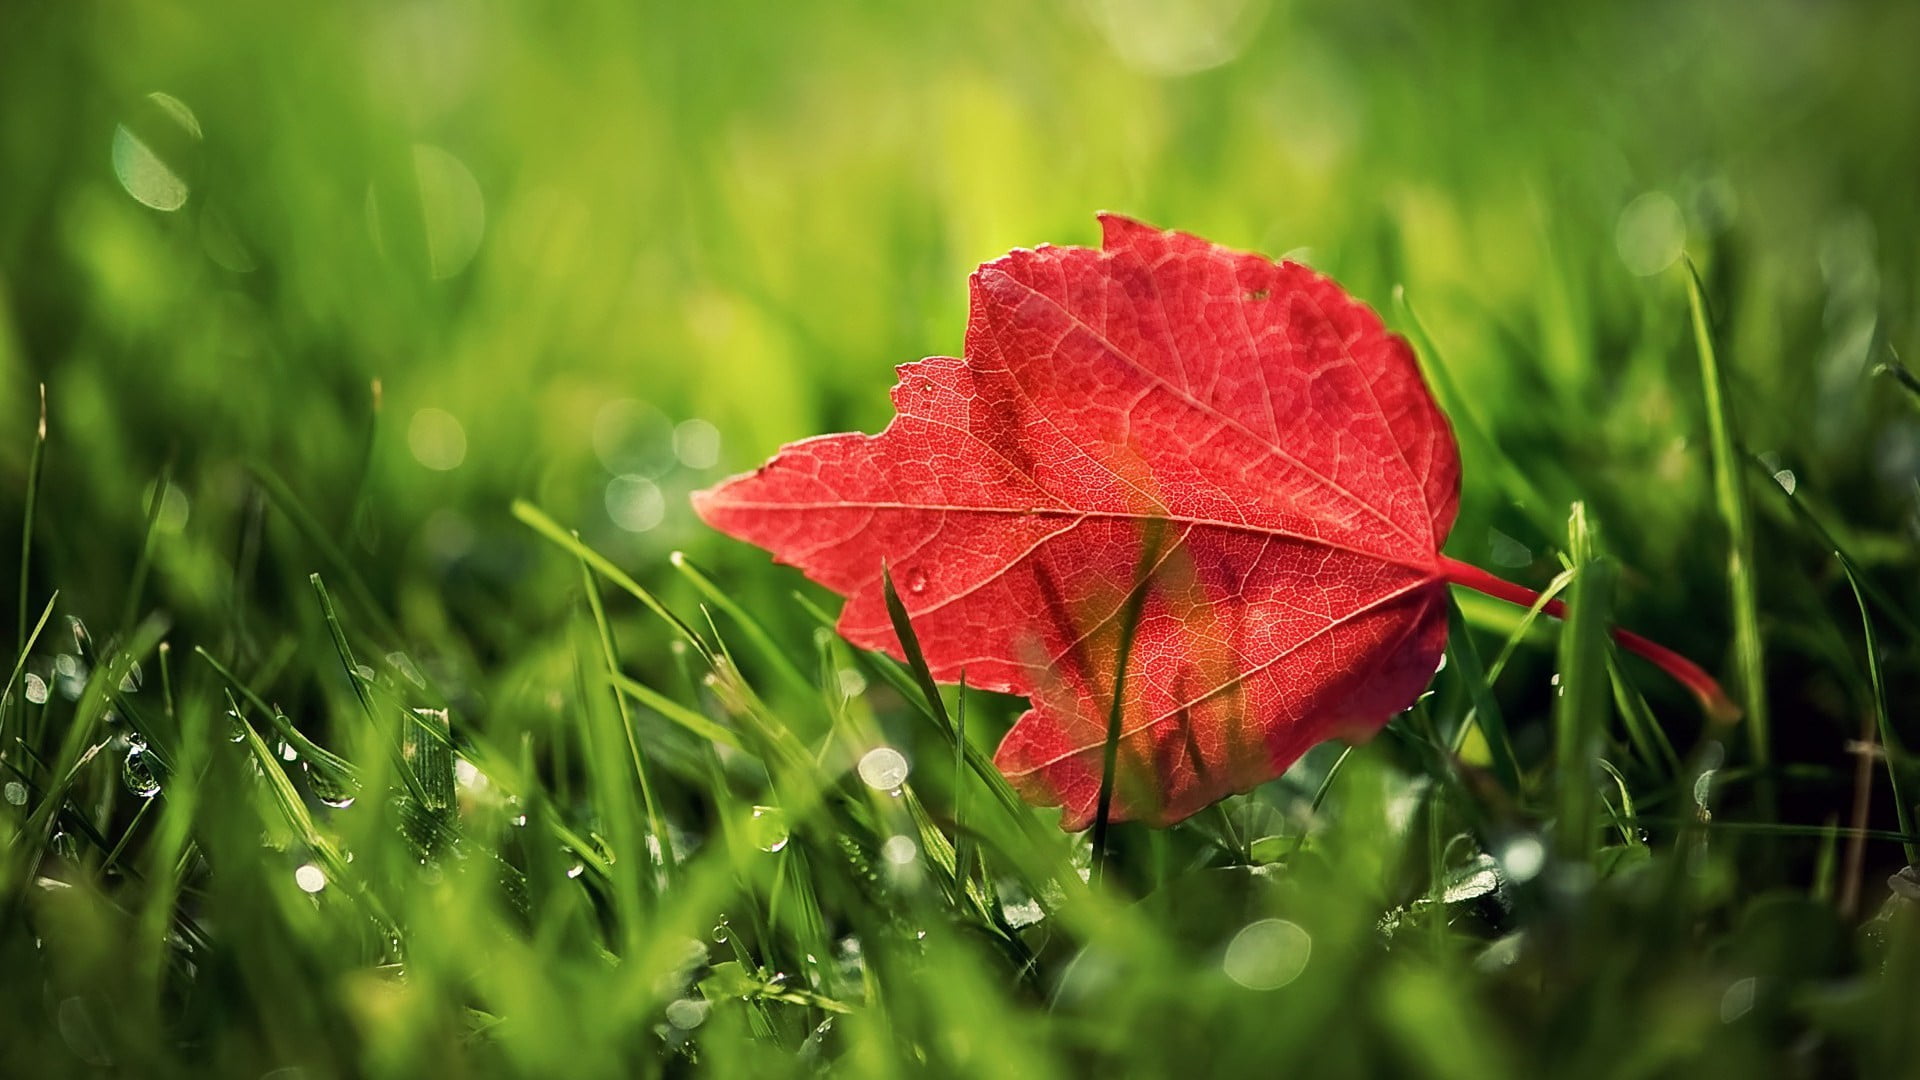 Online Crop Red Leaf Leaves Grass Nature Hd Wallpaper Wallpaper